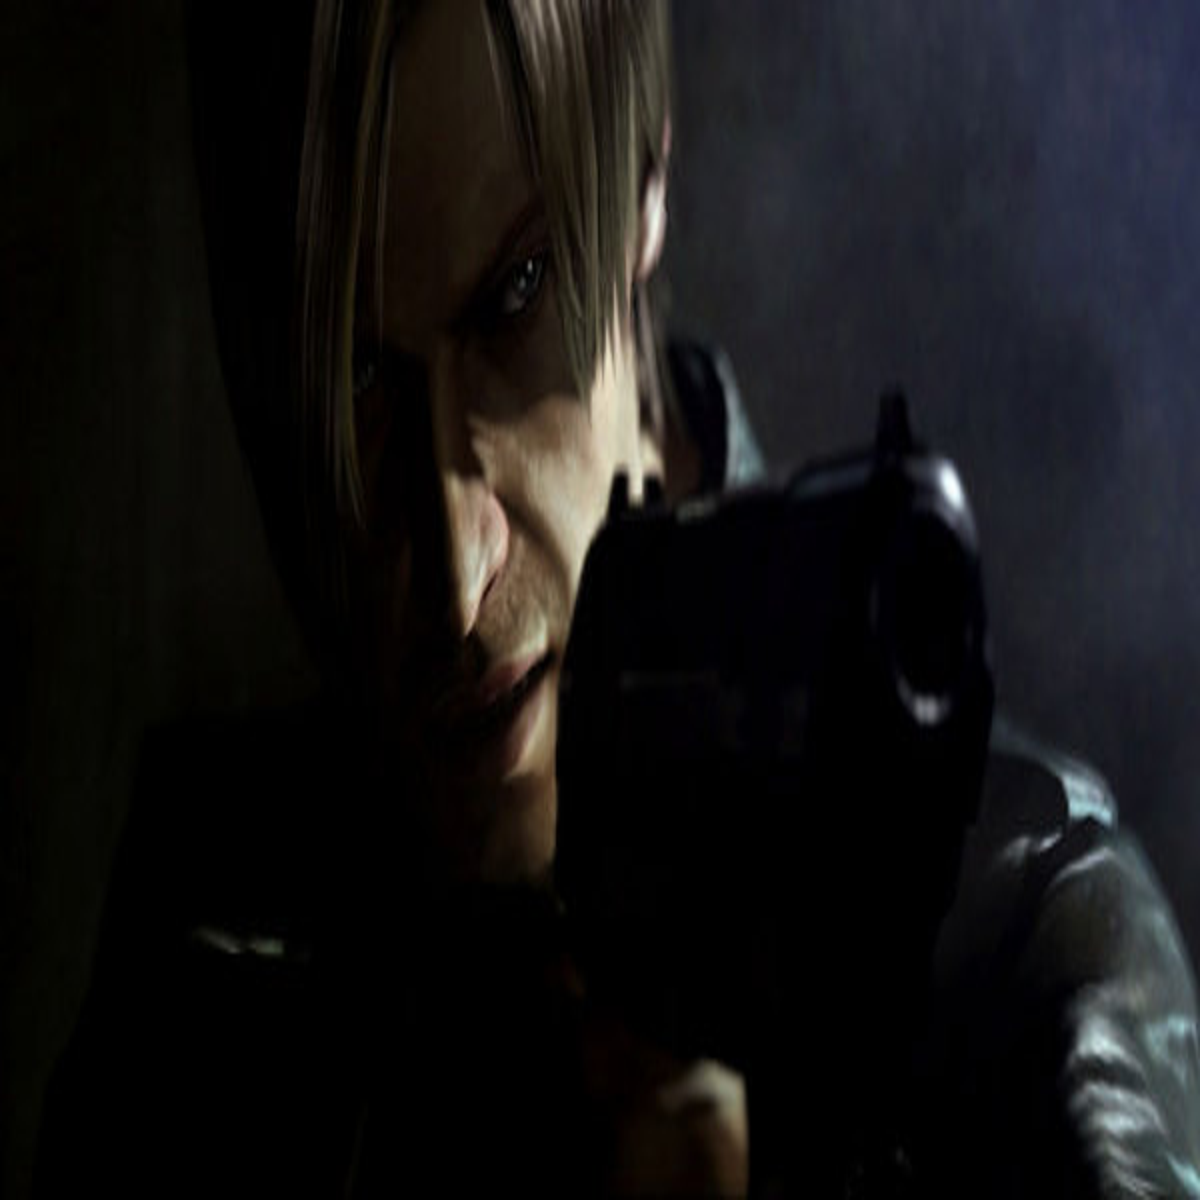 Ada Wong Playable In Resident Evil 6 - Game Informer